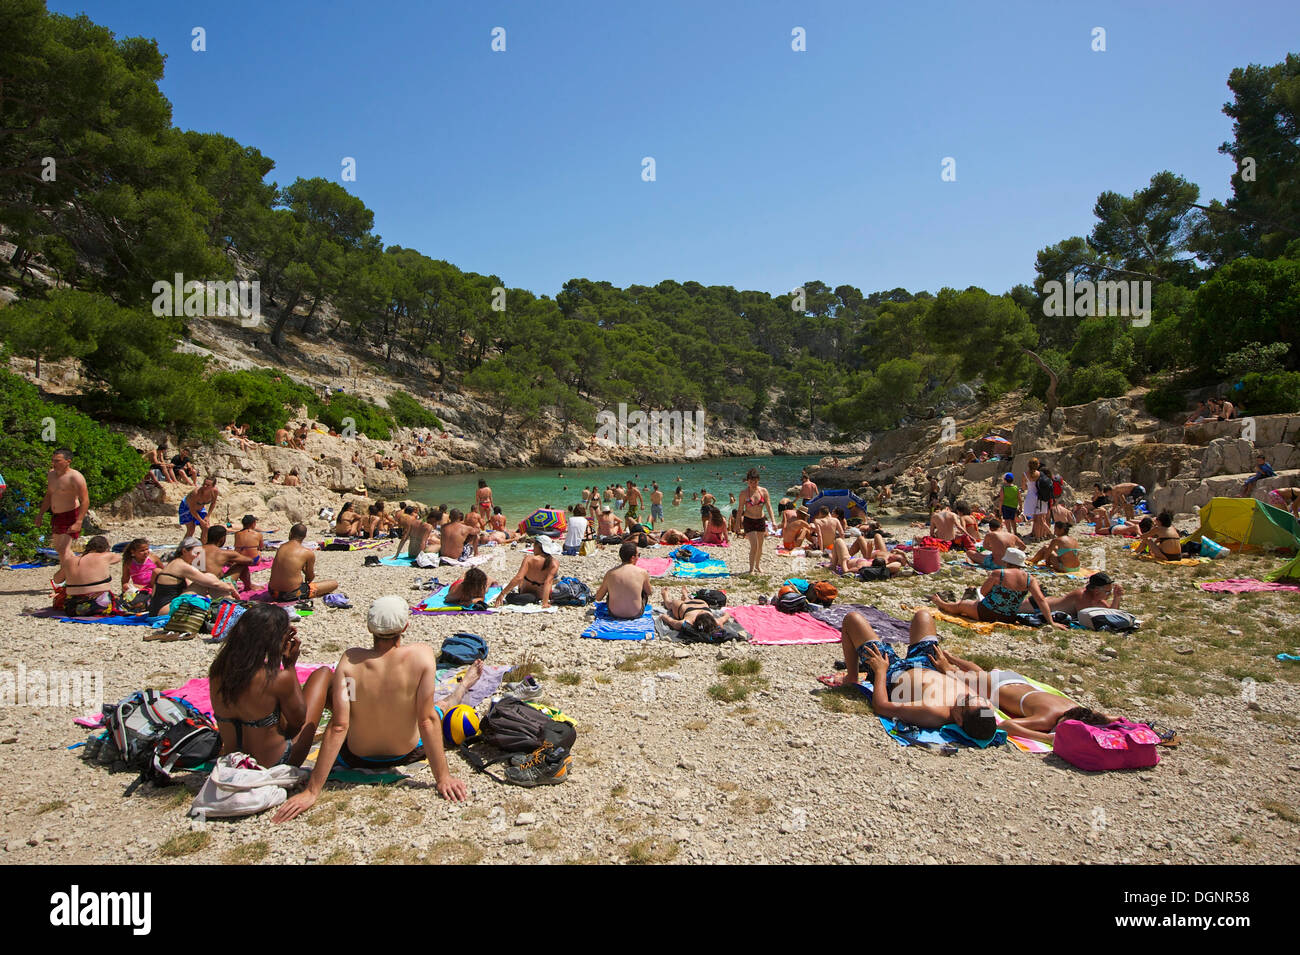 Badegäste am Strand in der Calanque de Port-Pin Bucht, Region, Département Bouches-du-Rhône, Cassis, Calanques Nationalpark Stockfoto